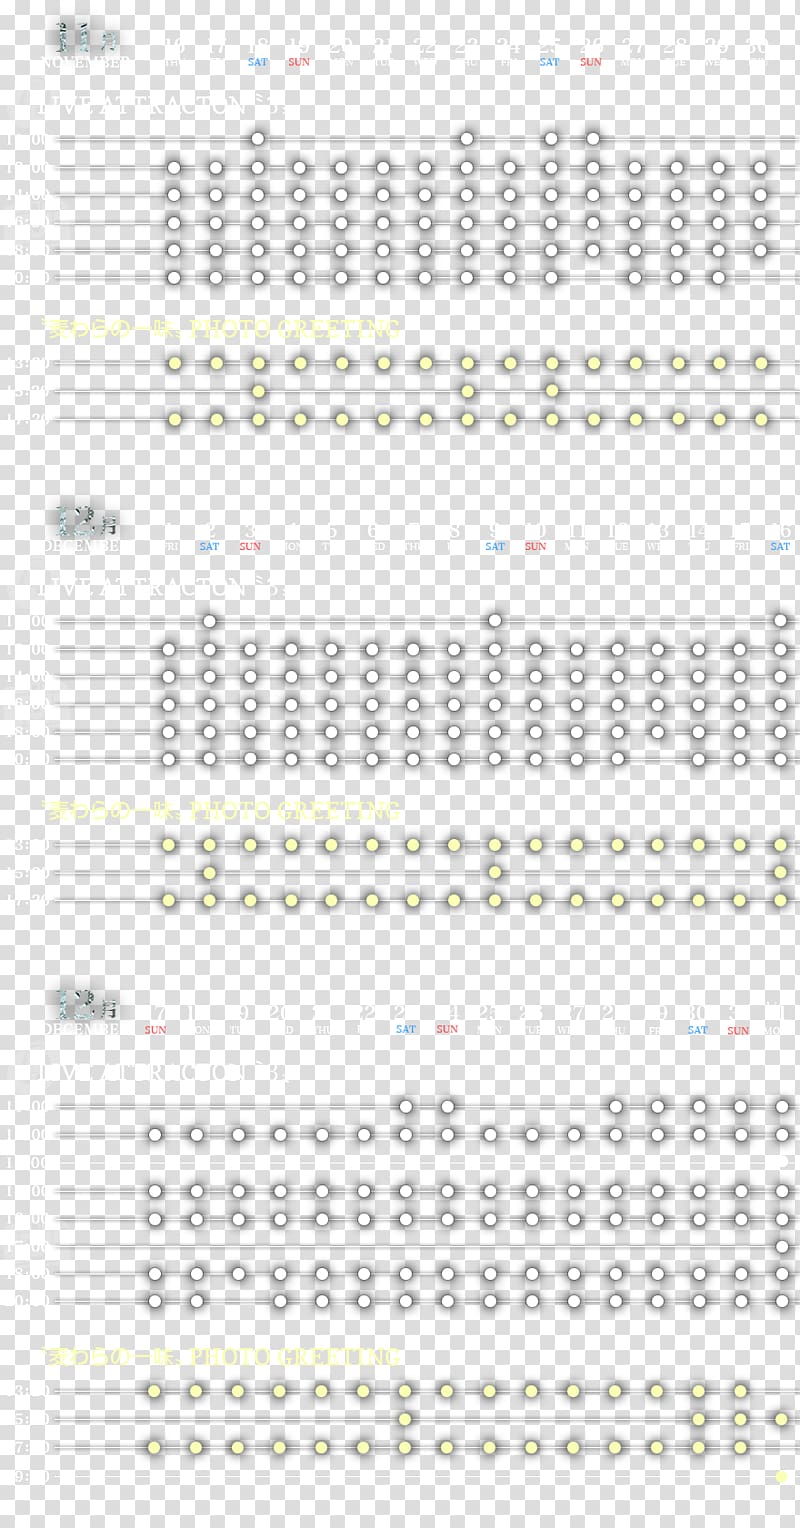 Line Point Calendar Pattern, tokyo tower transparent background PNG clipart